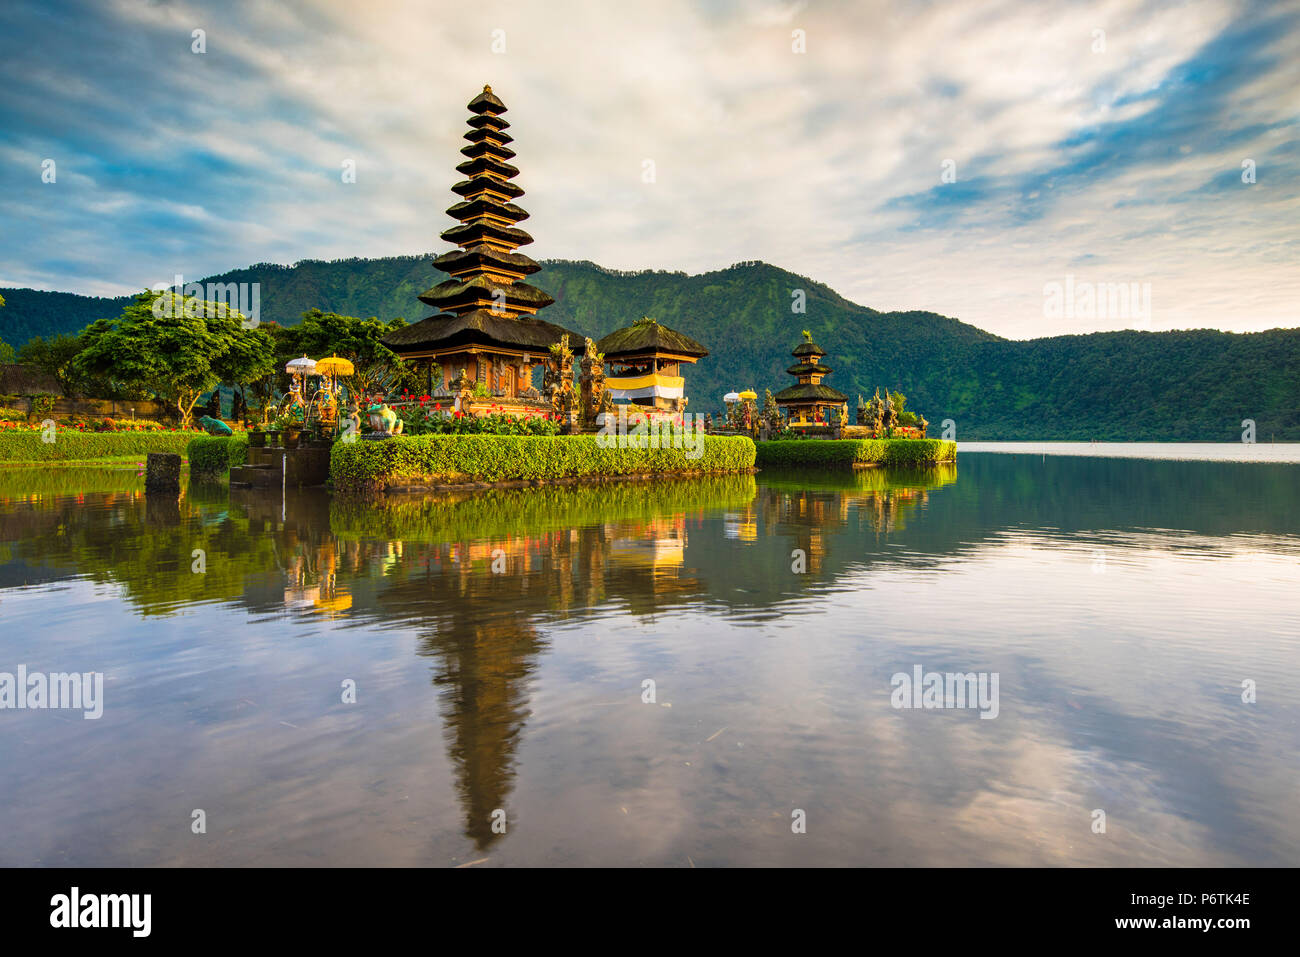 Bali, Indonesia, South East Asia. Pura Ulun Danu Bratan water temple at the edge of Lake Bratan. Stock Photo